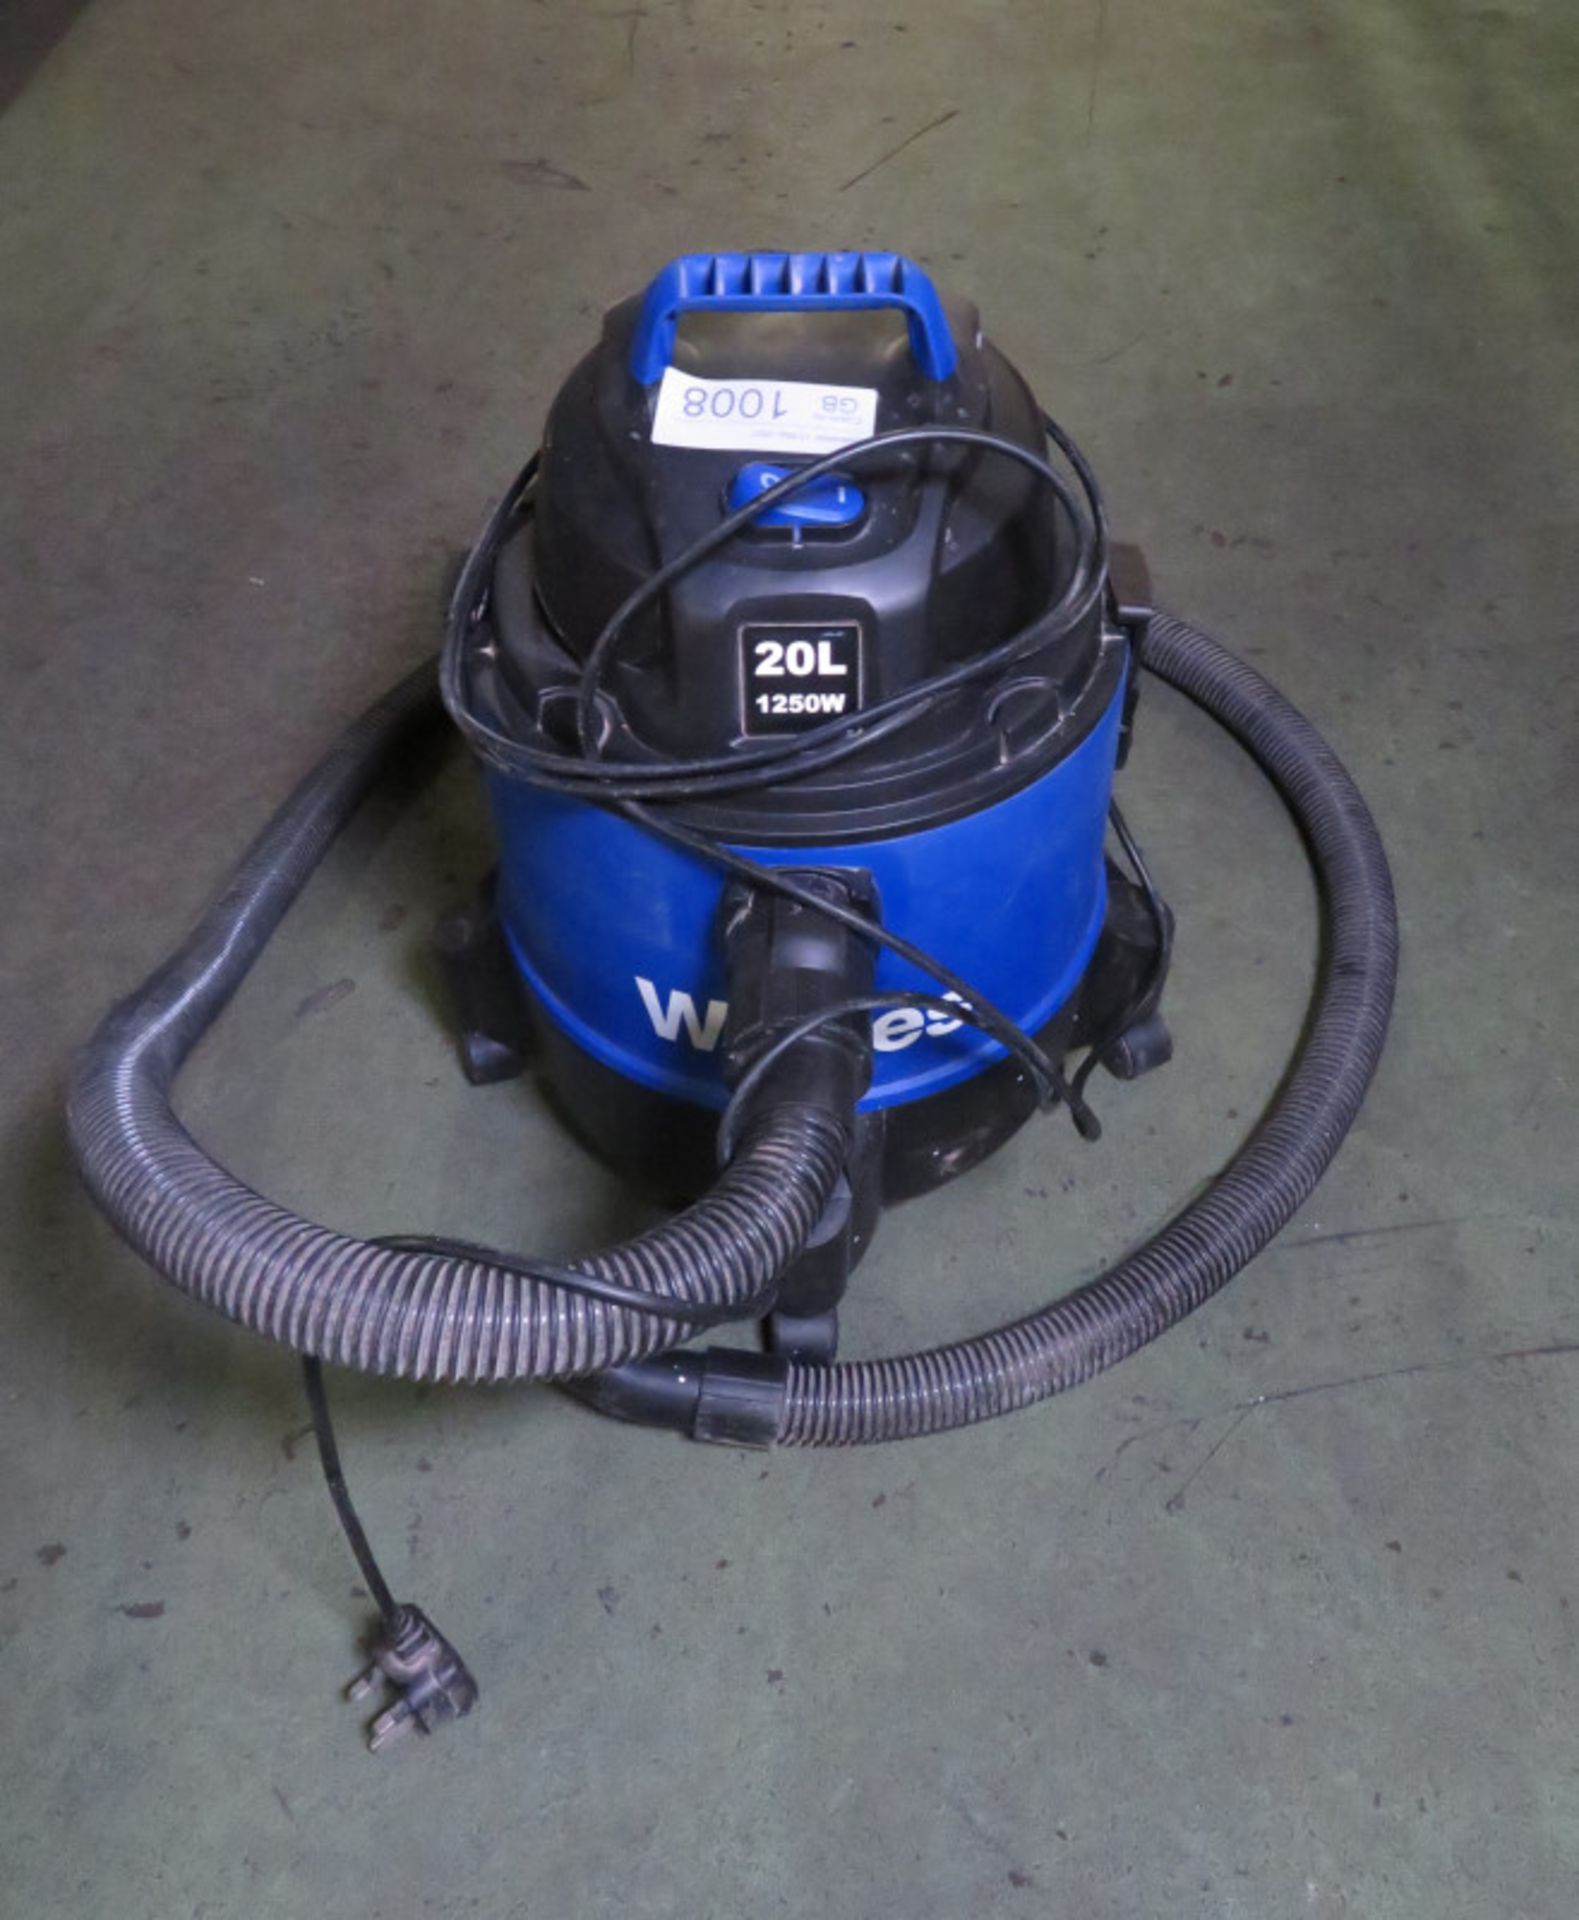 Wickes 20L 1250W model 215735 vacuum cleaner